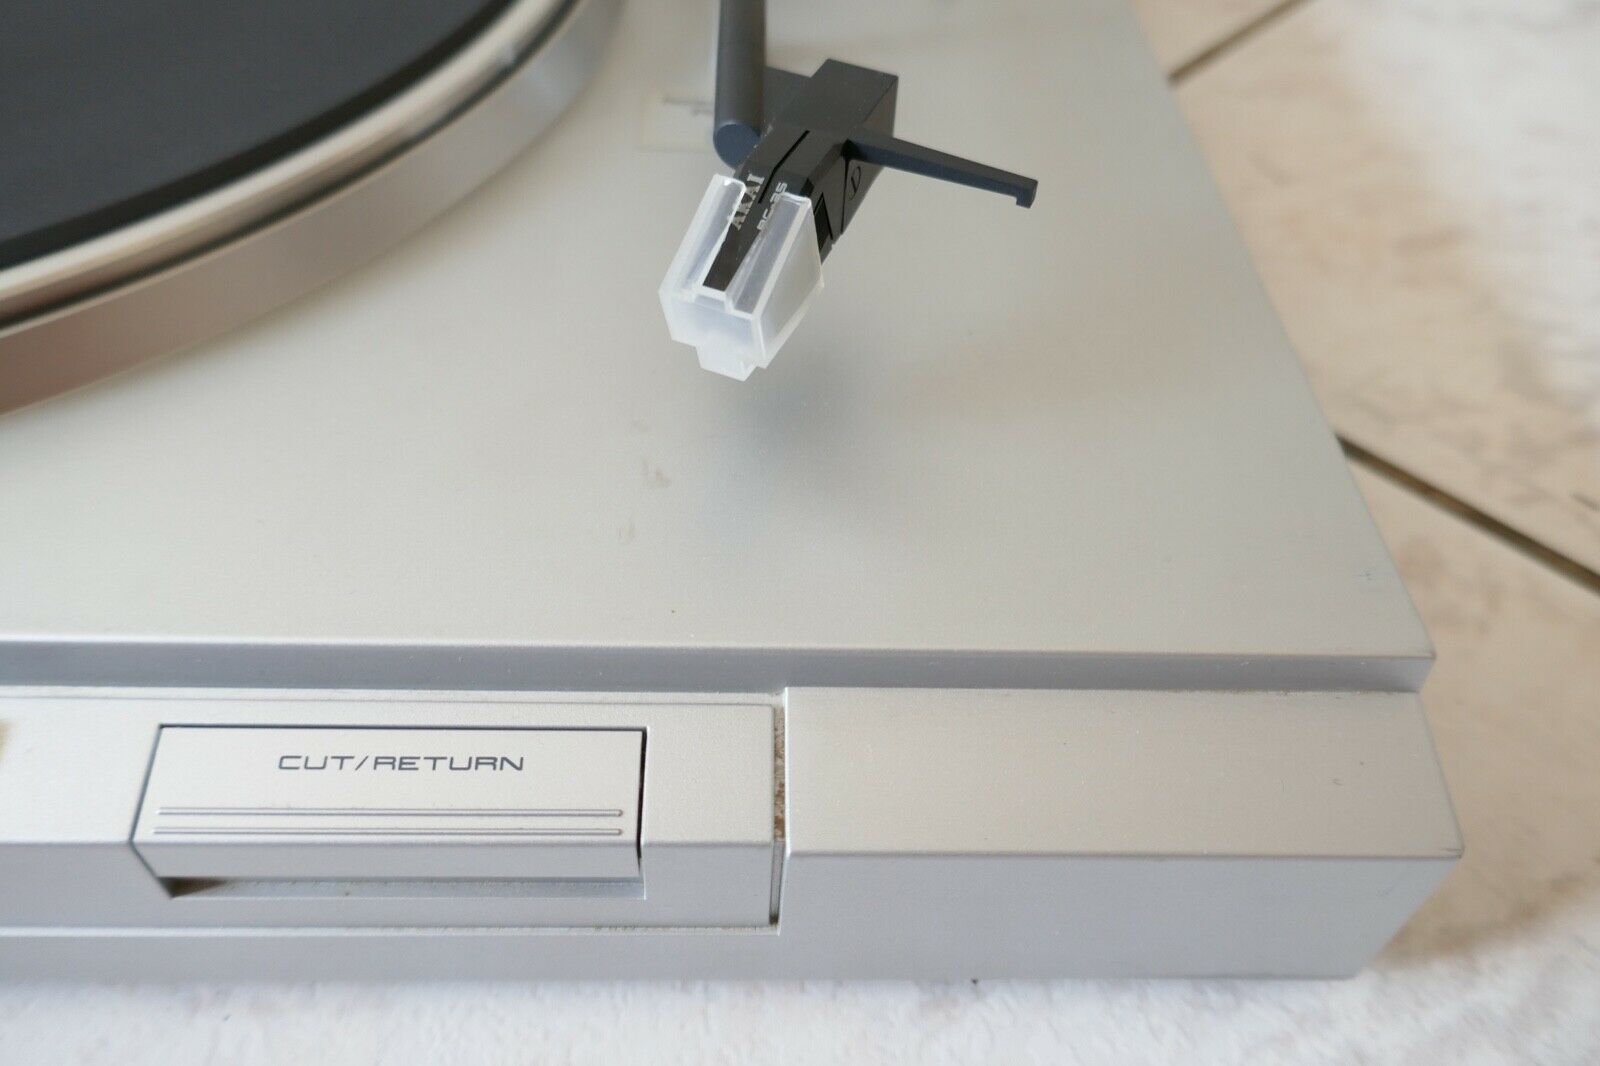 platine vinyle turntable akai AP-A1 vintage occasion